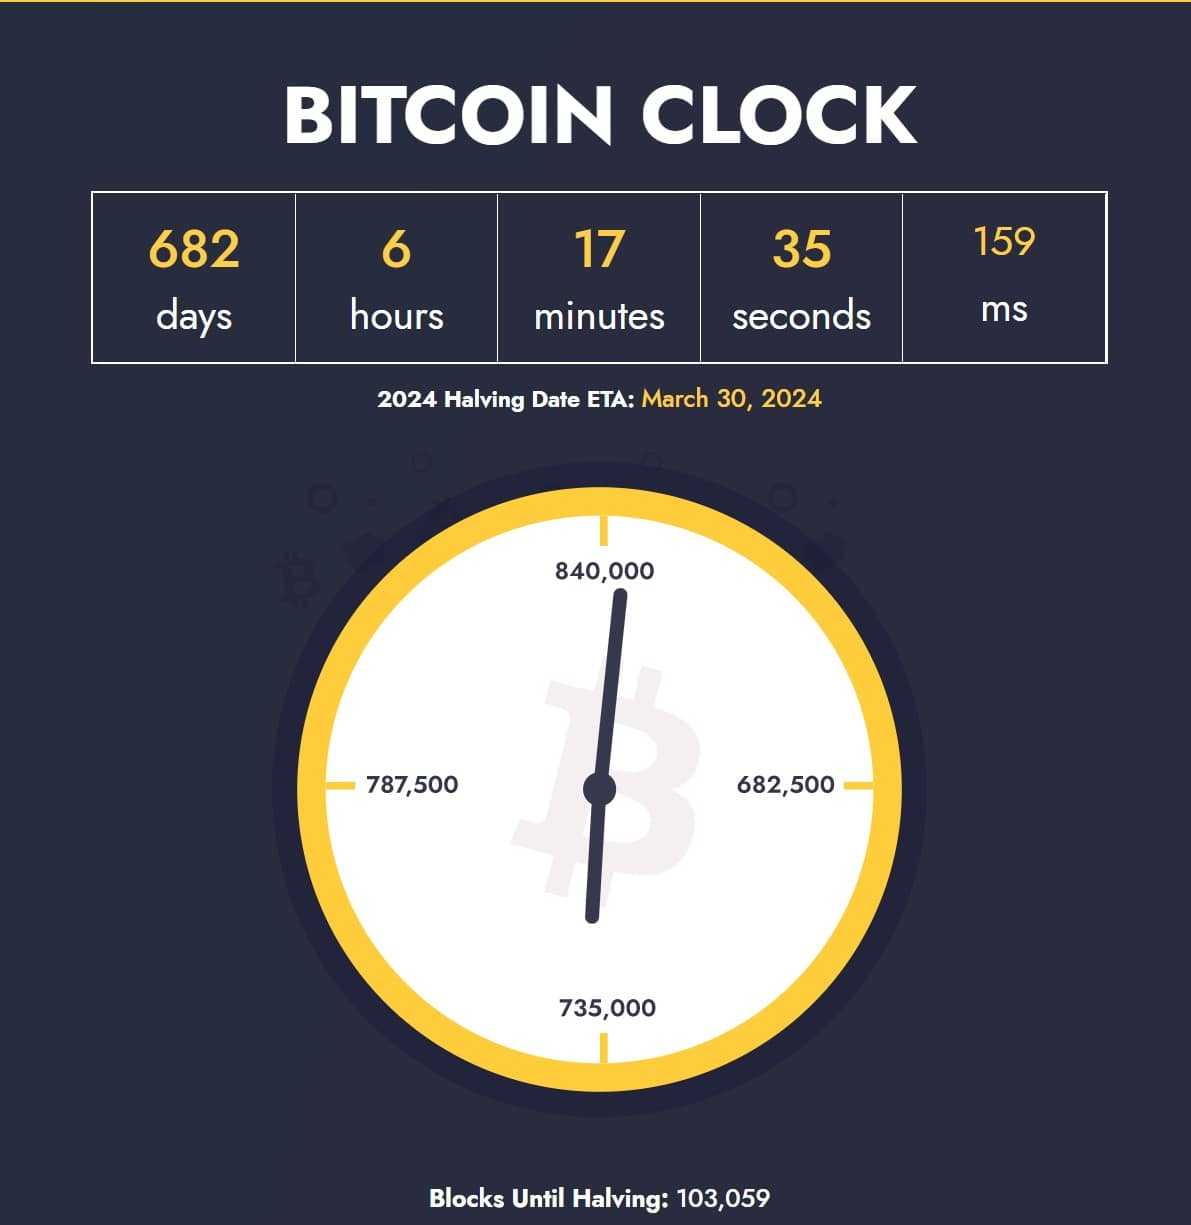 bitcoin halving clock